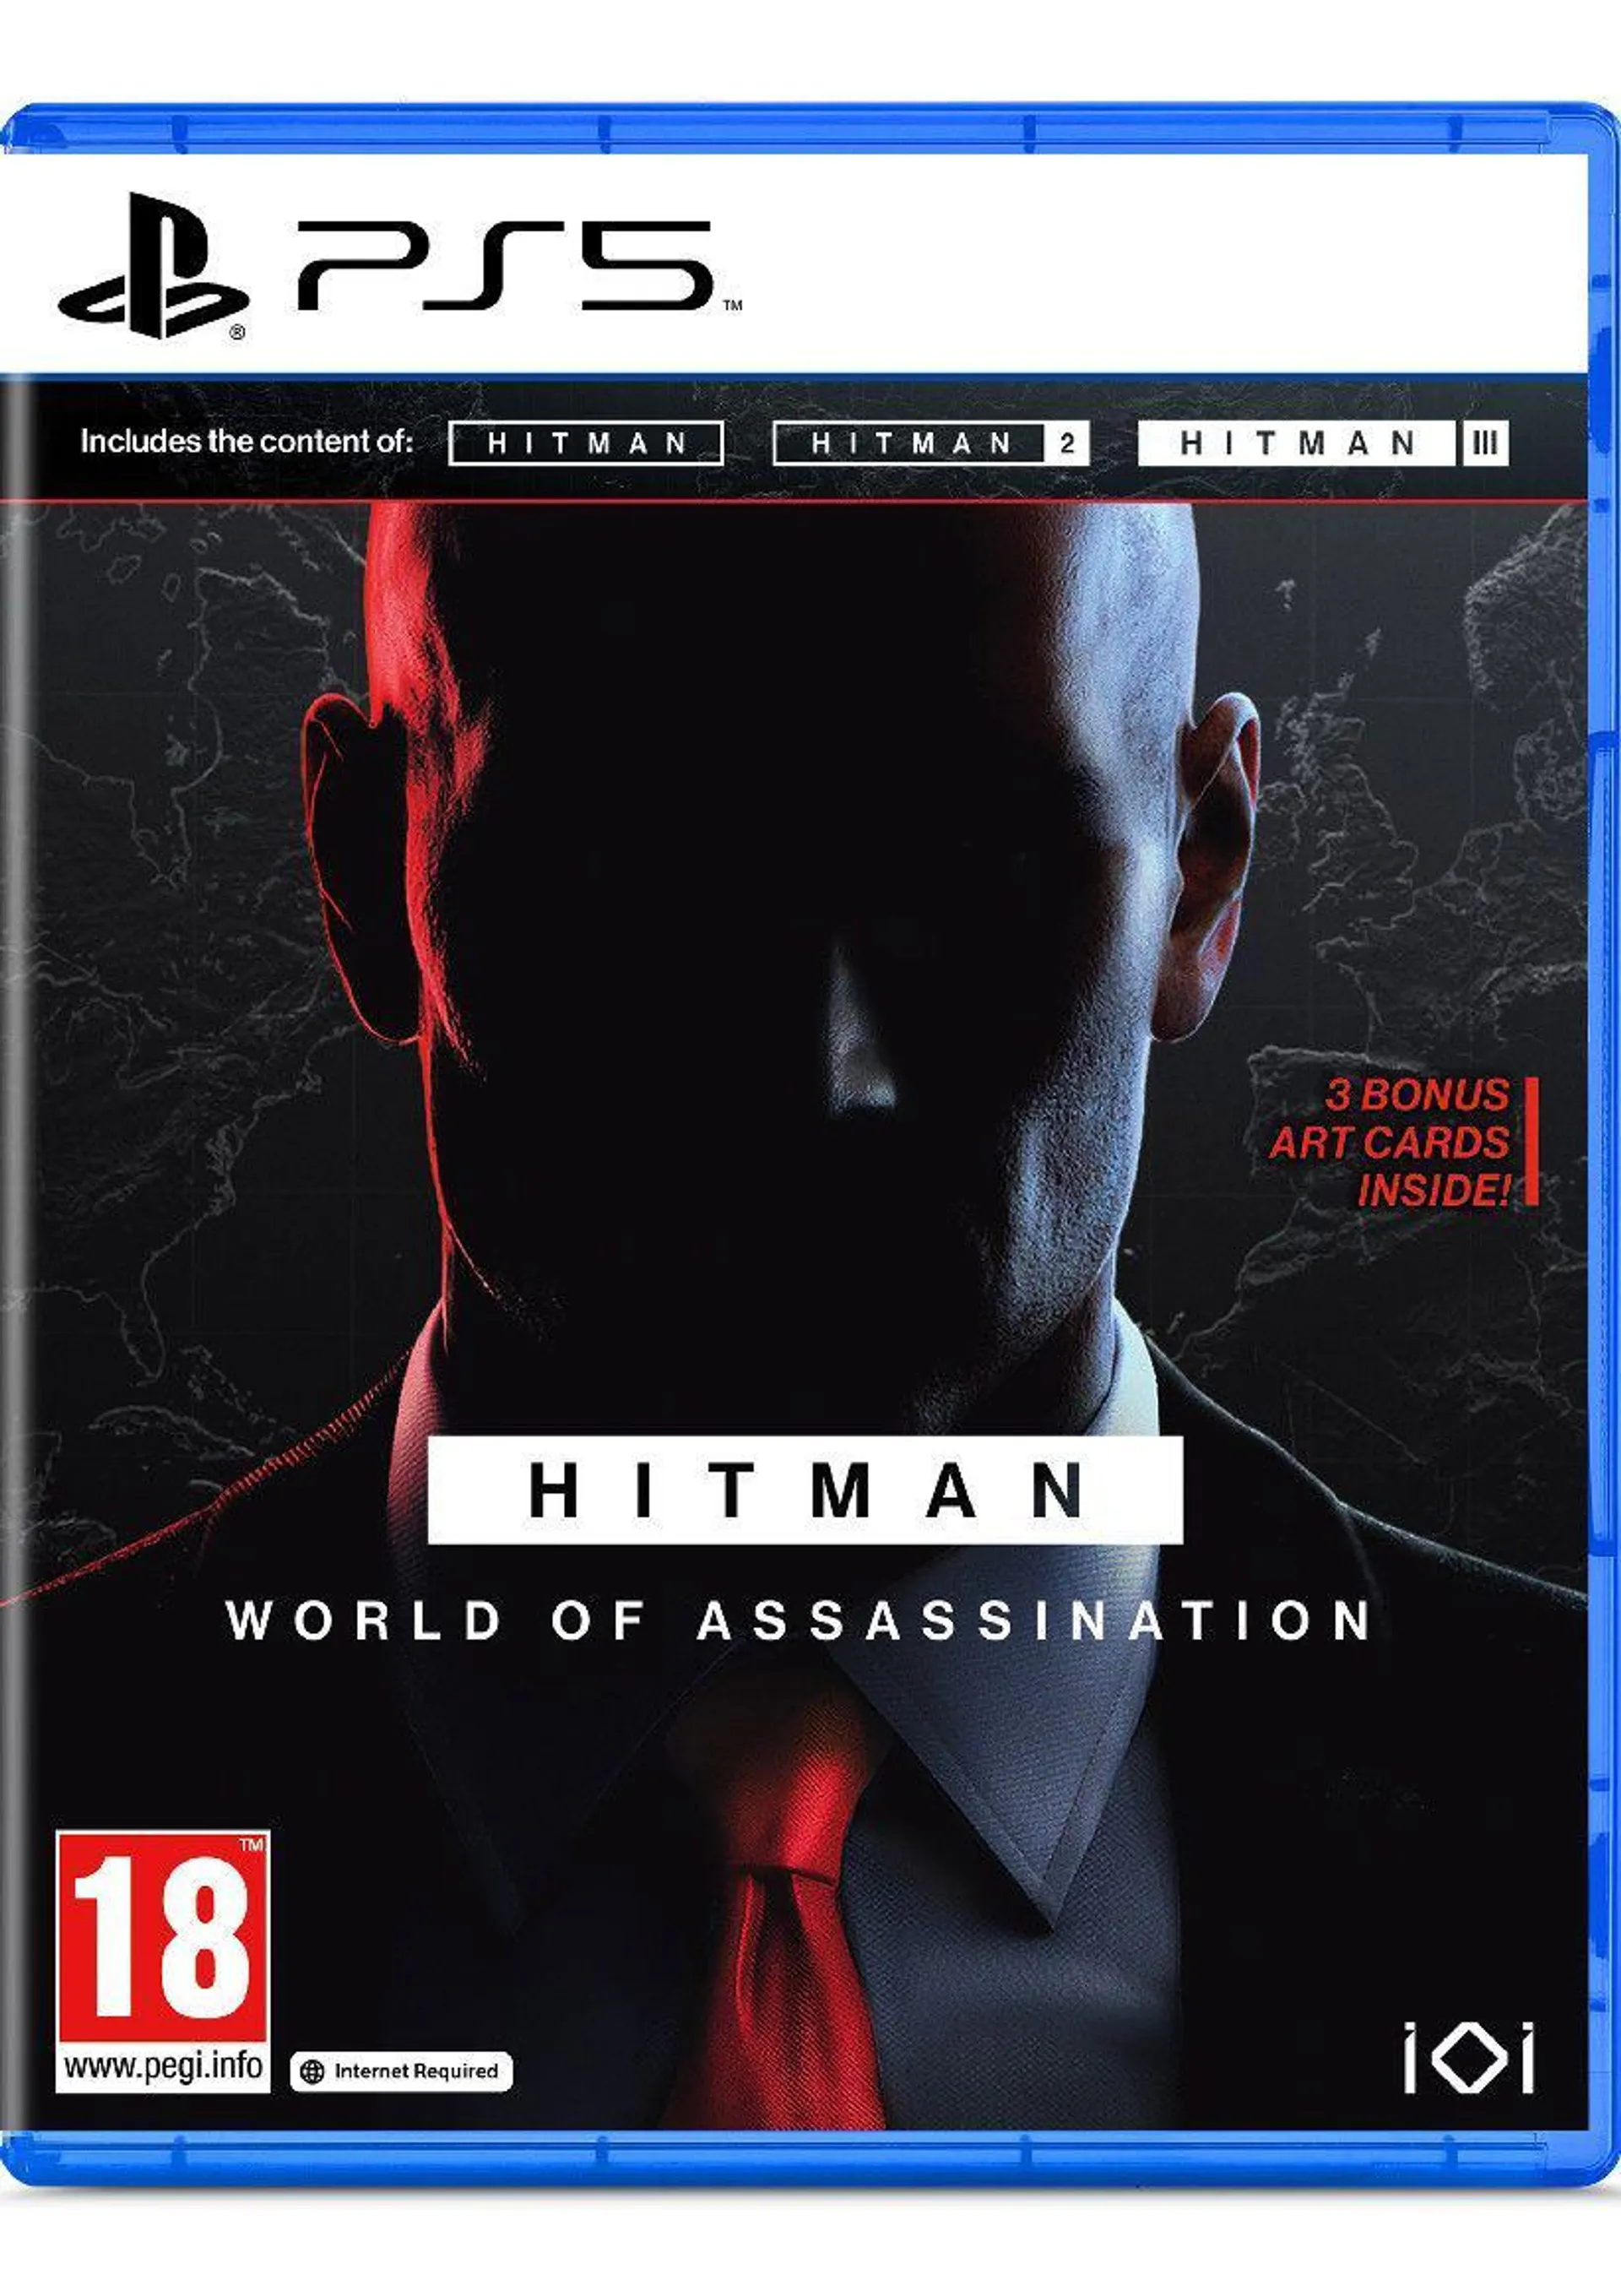 HITMAN World of Assassination on PlayStation 5